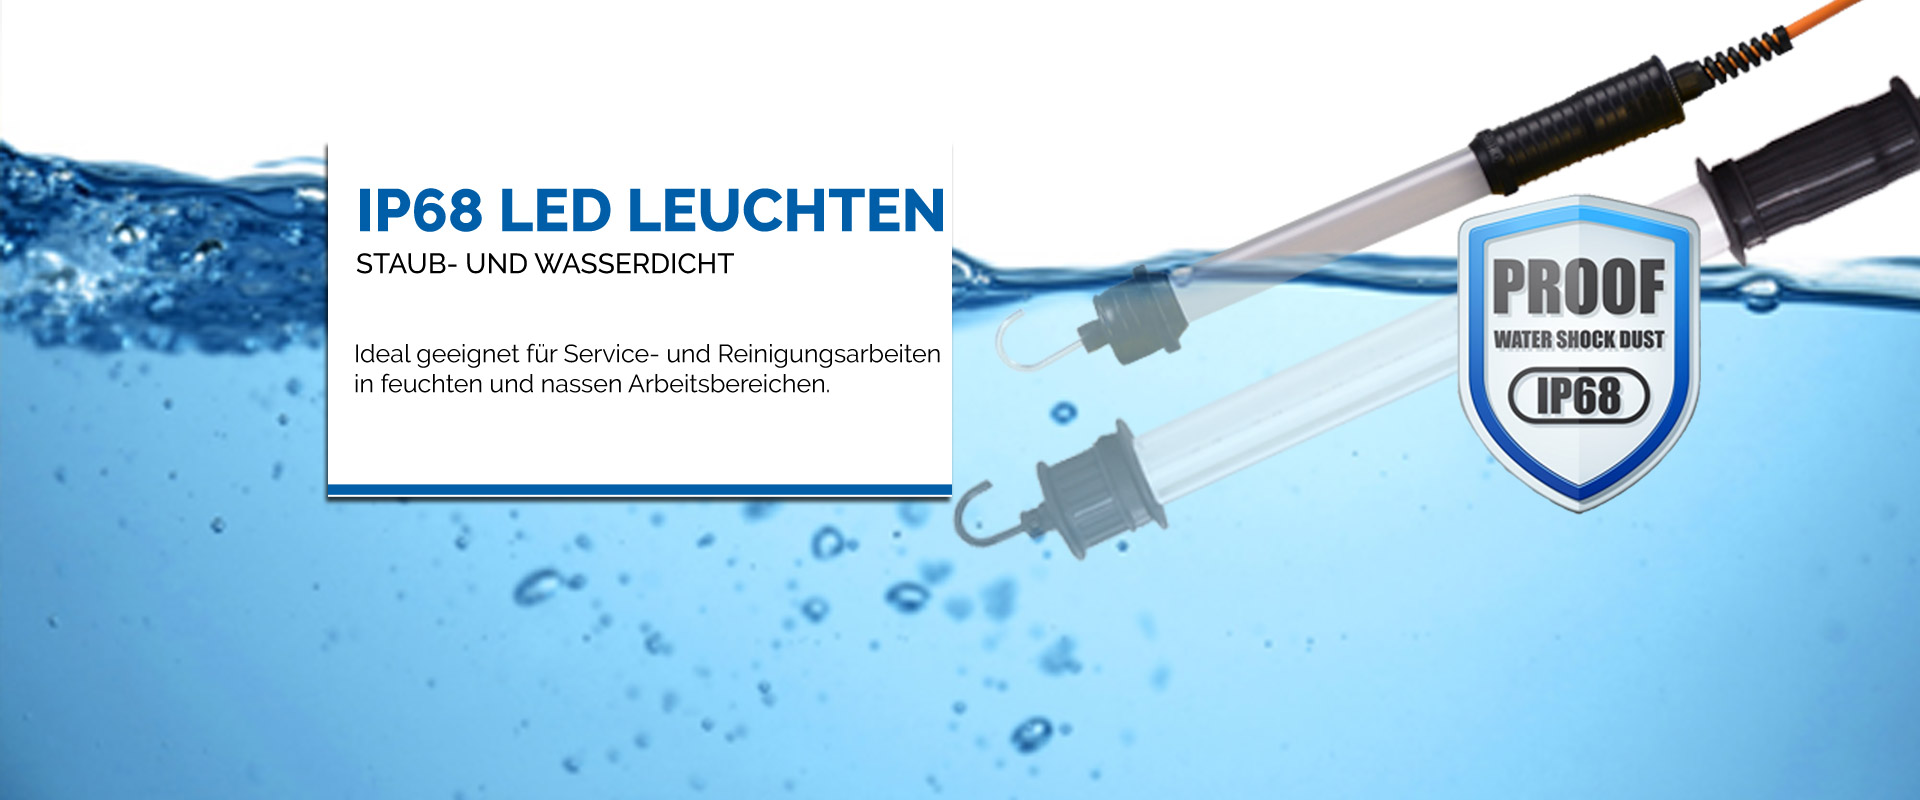 IP68 LED Handleuchten - wasserdicht - KIRA Leuchten GmbH